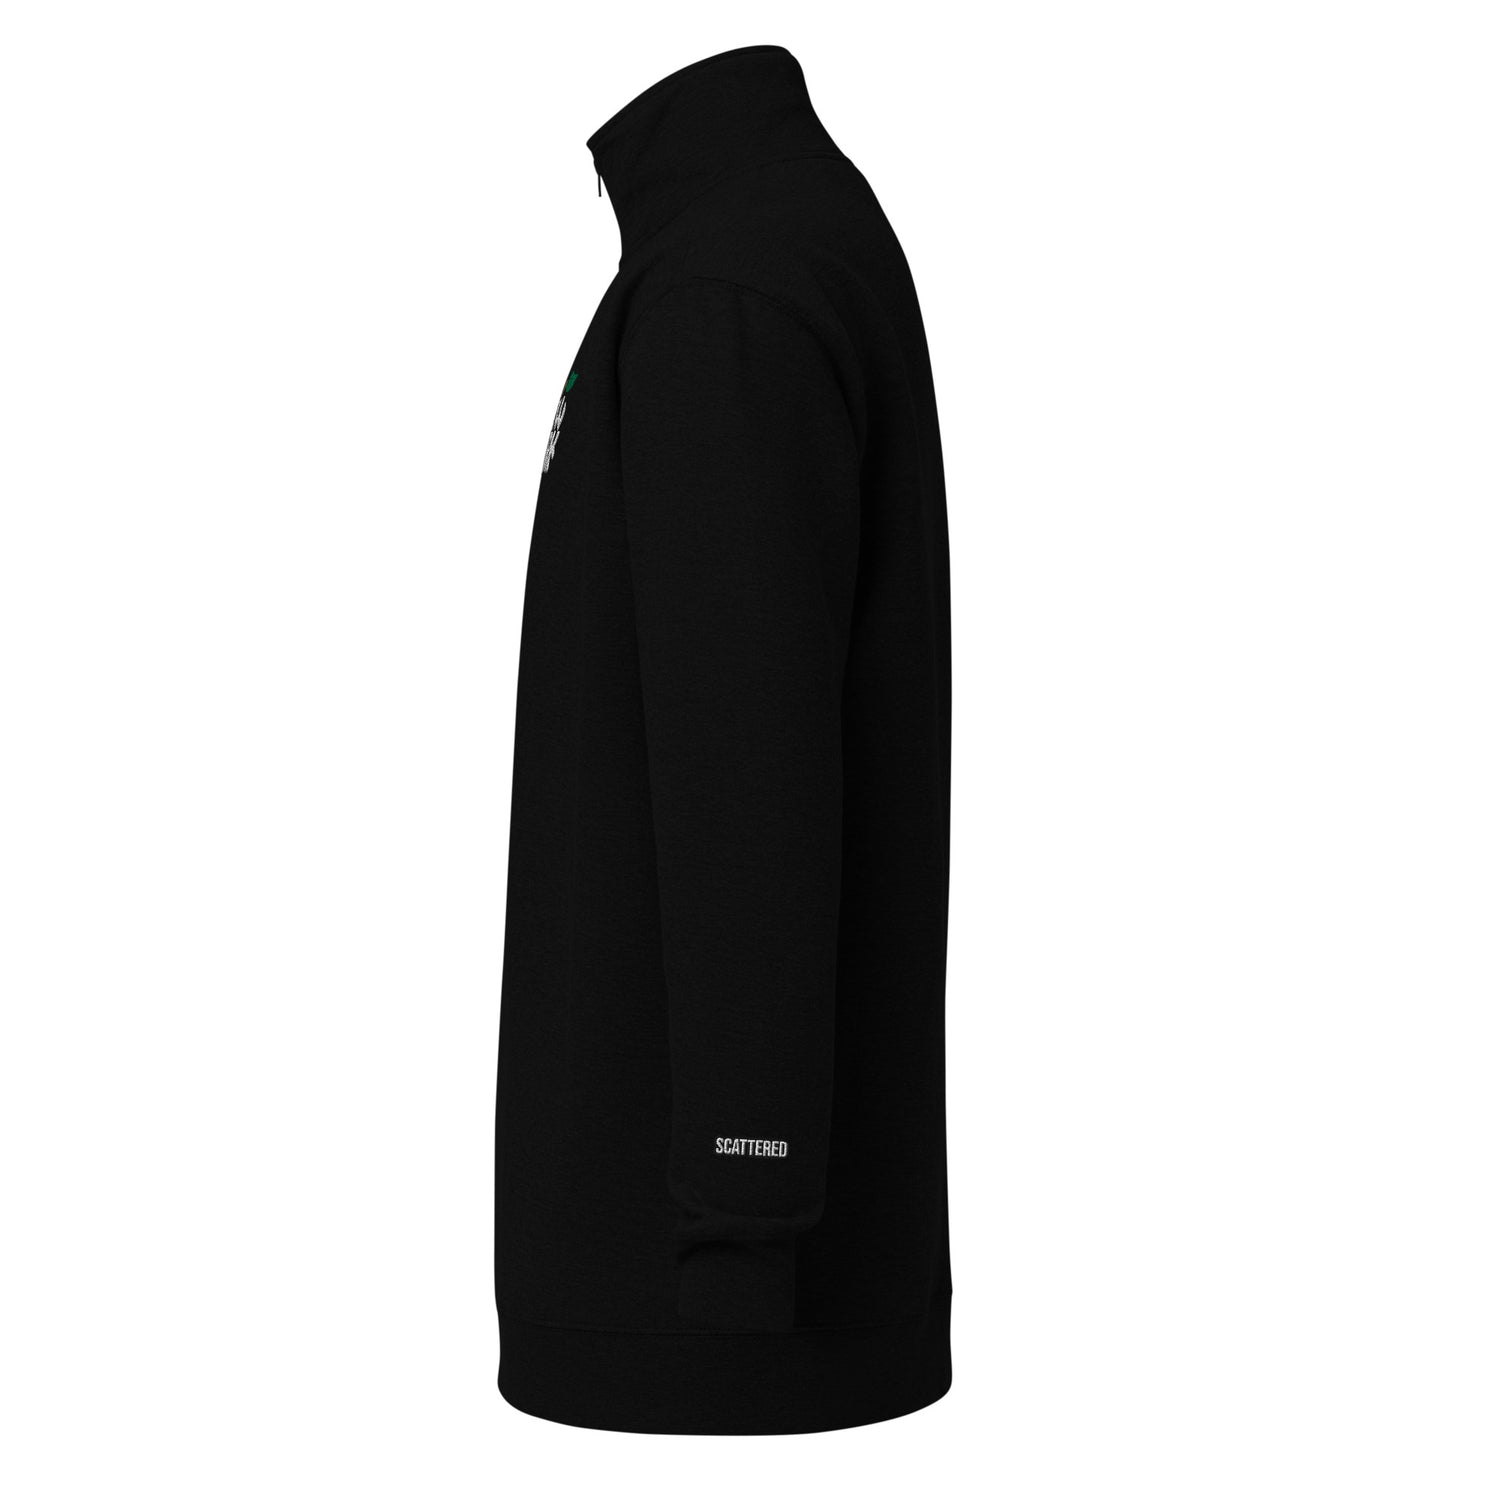 New York Apple Logo Embroidered Black Fleece Pullover Sweatshirt Scattered Streetwear